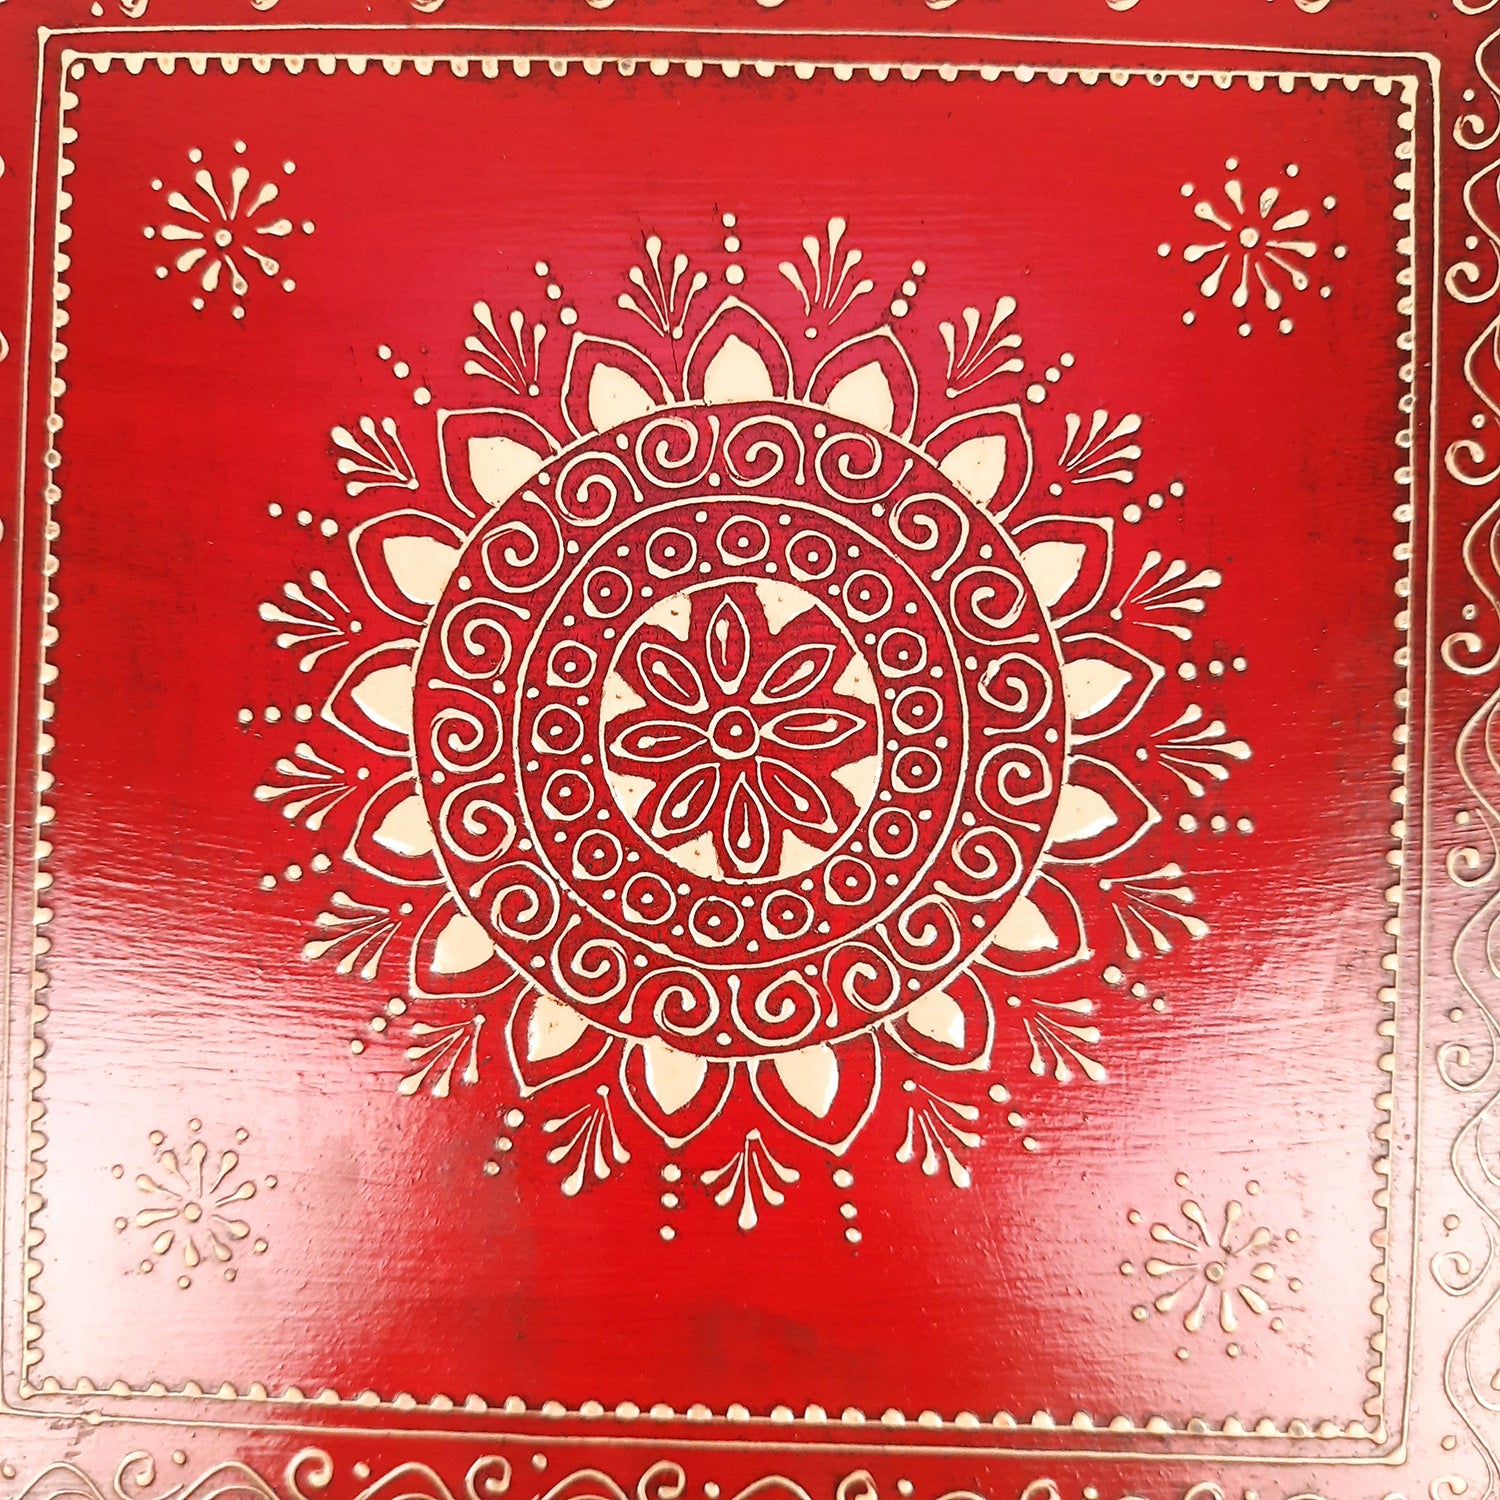 Wooden Puja Peeta Chowki | Stool / Aasan for God Idols |Wooden Pooja Chowki Table - for Festivals, Home, living Room, Corner, Mandir Decoration & Gifts - Apkamart #Color_Red